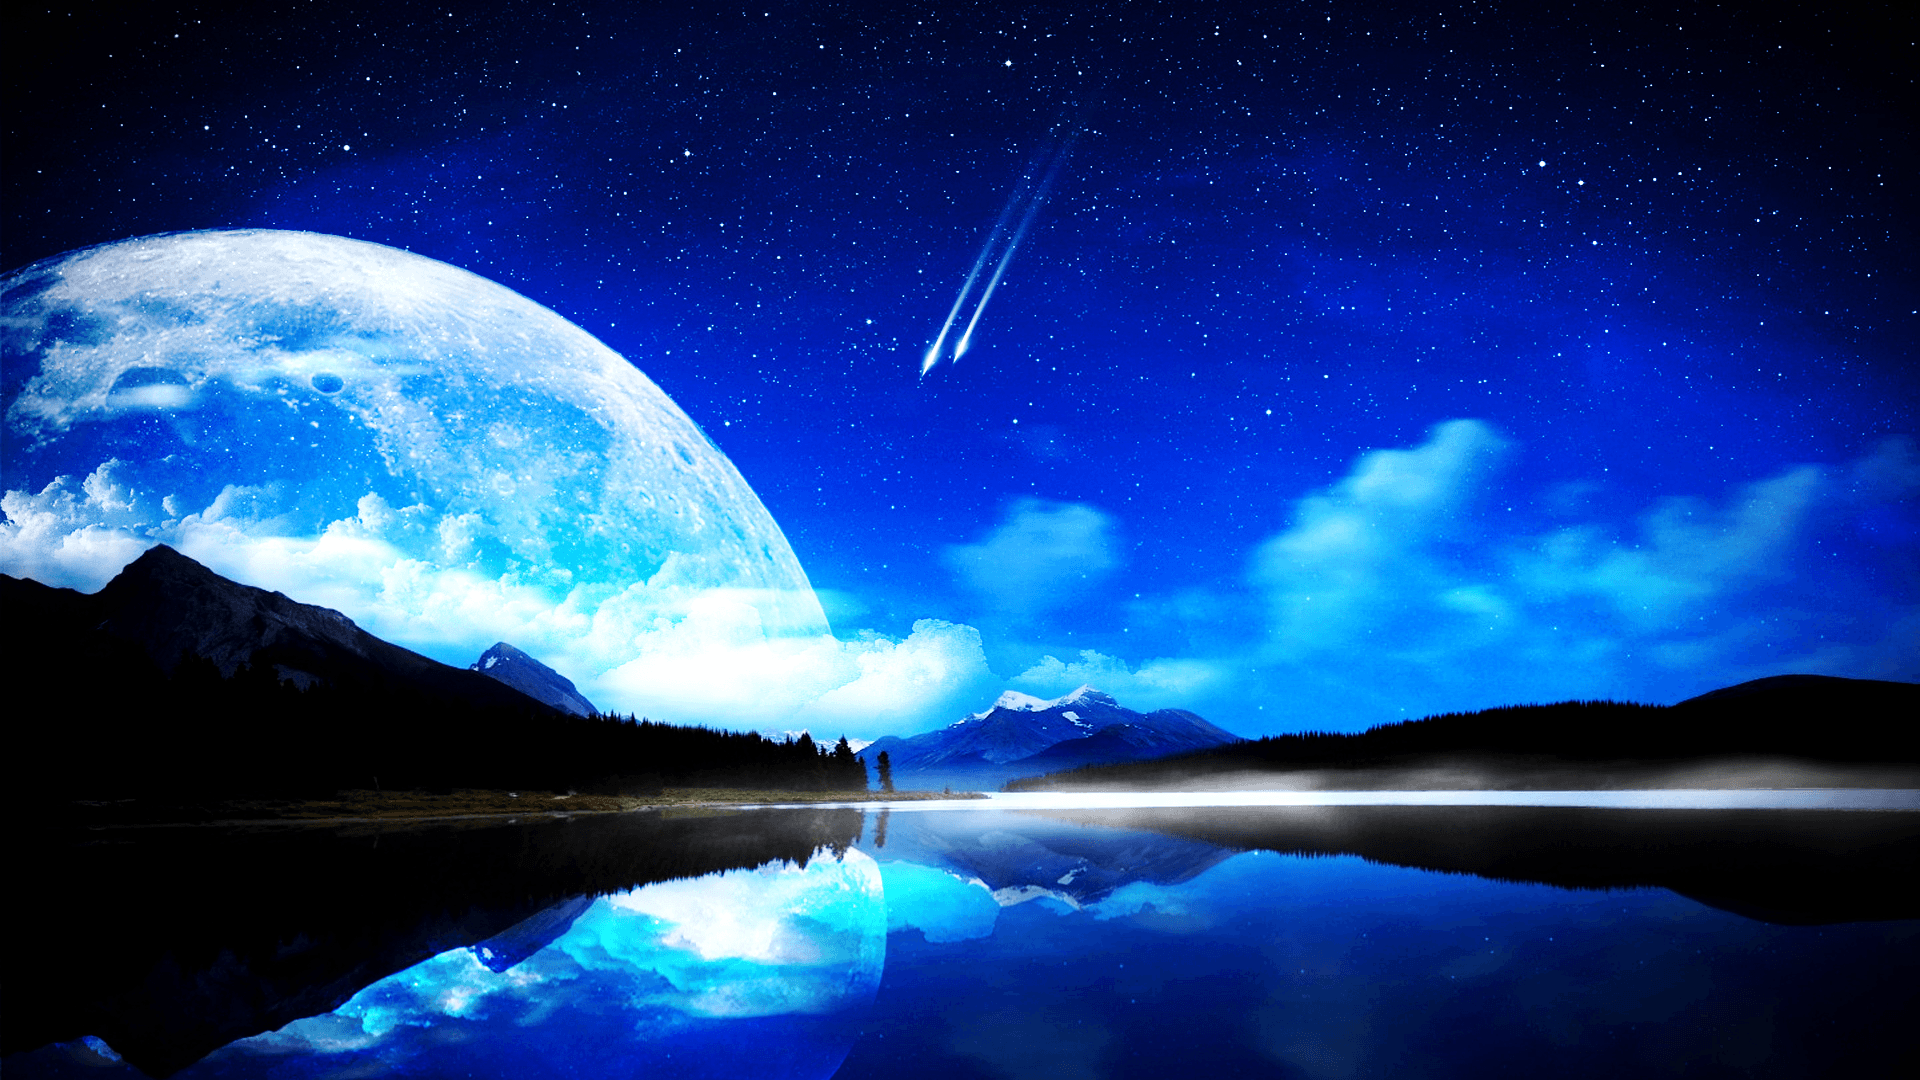 The blue moon HD Wallpaper